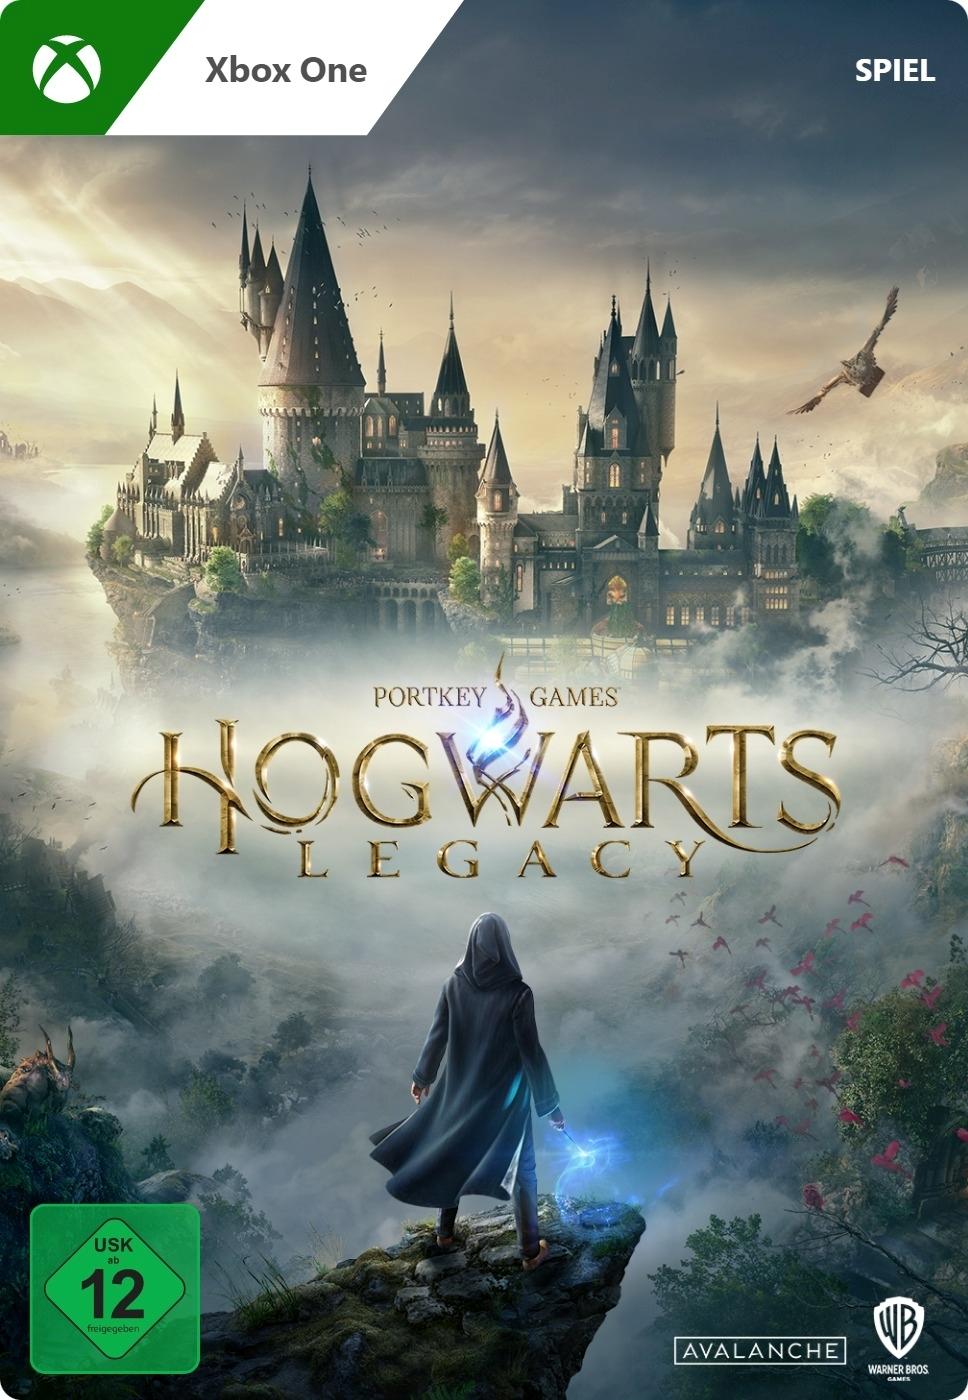 Hogwarts Legacy (Xbox One) - Xbox One - Game | G3Q-01876 (cf2f1bf6-4570-fc4b-bd27-1dae1d71e235)